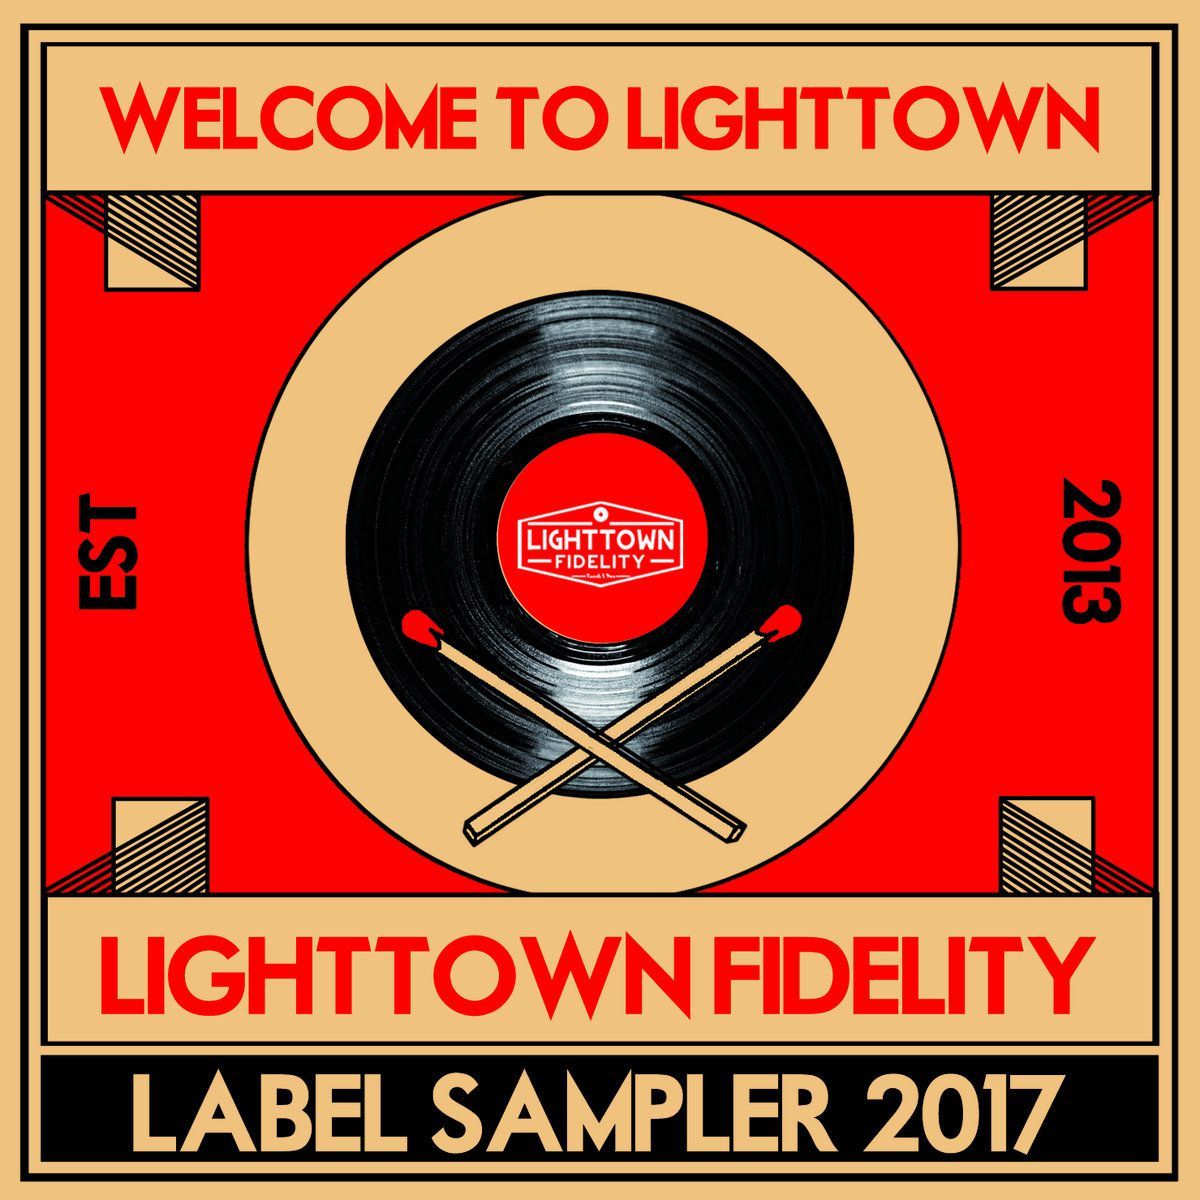 Lighttown Fidelity